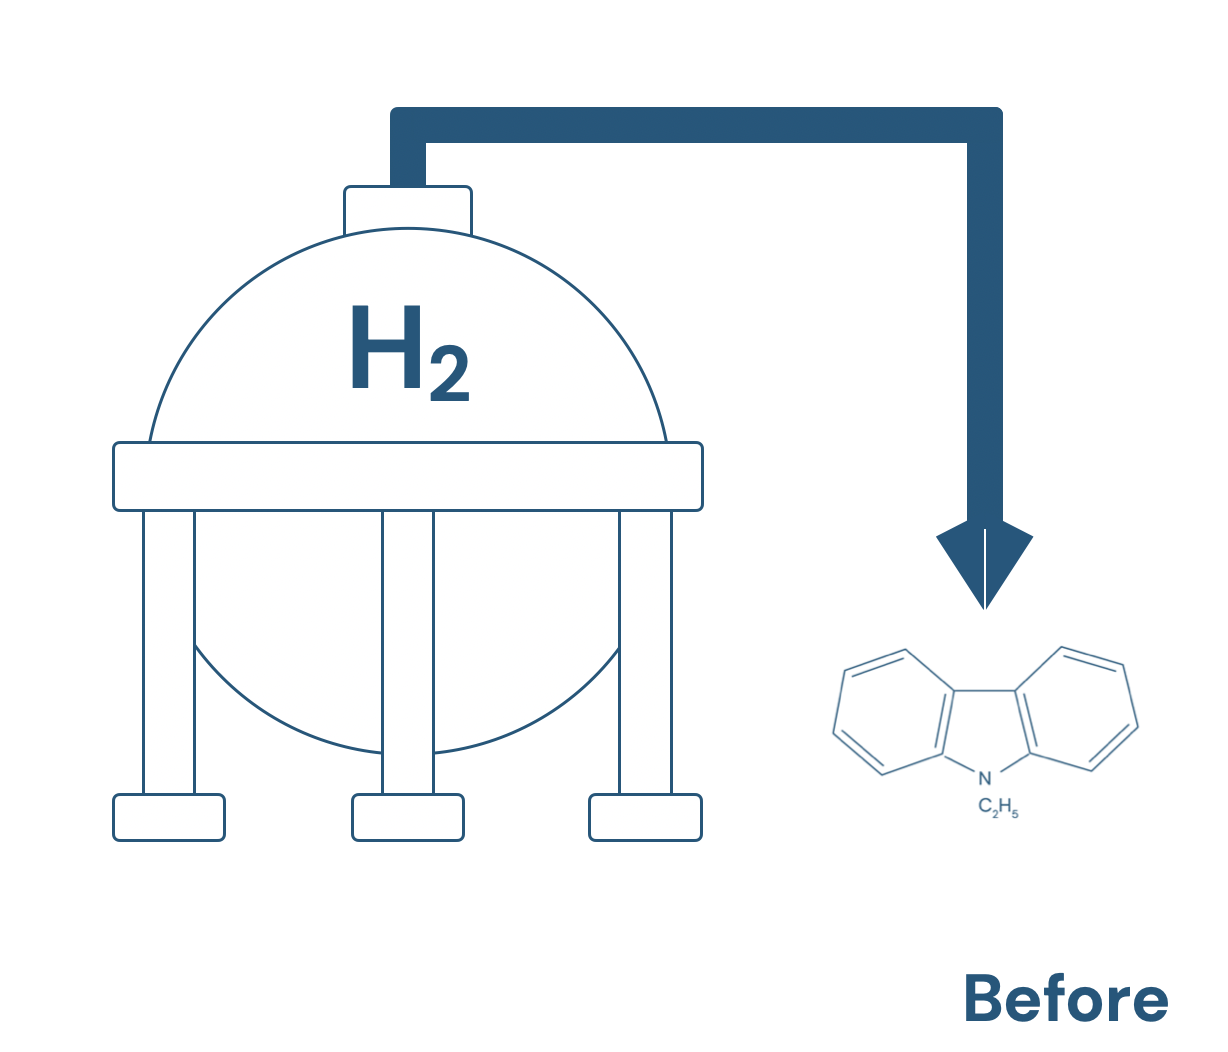 Decreasing volume of hydrogen by storing hydrogen inside LOHC